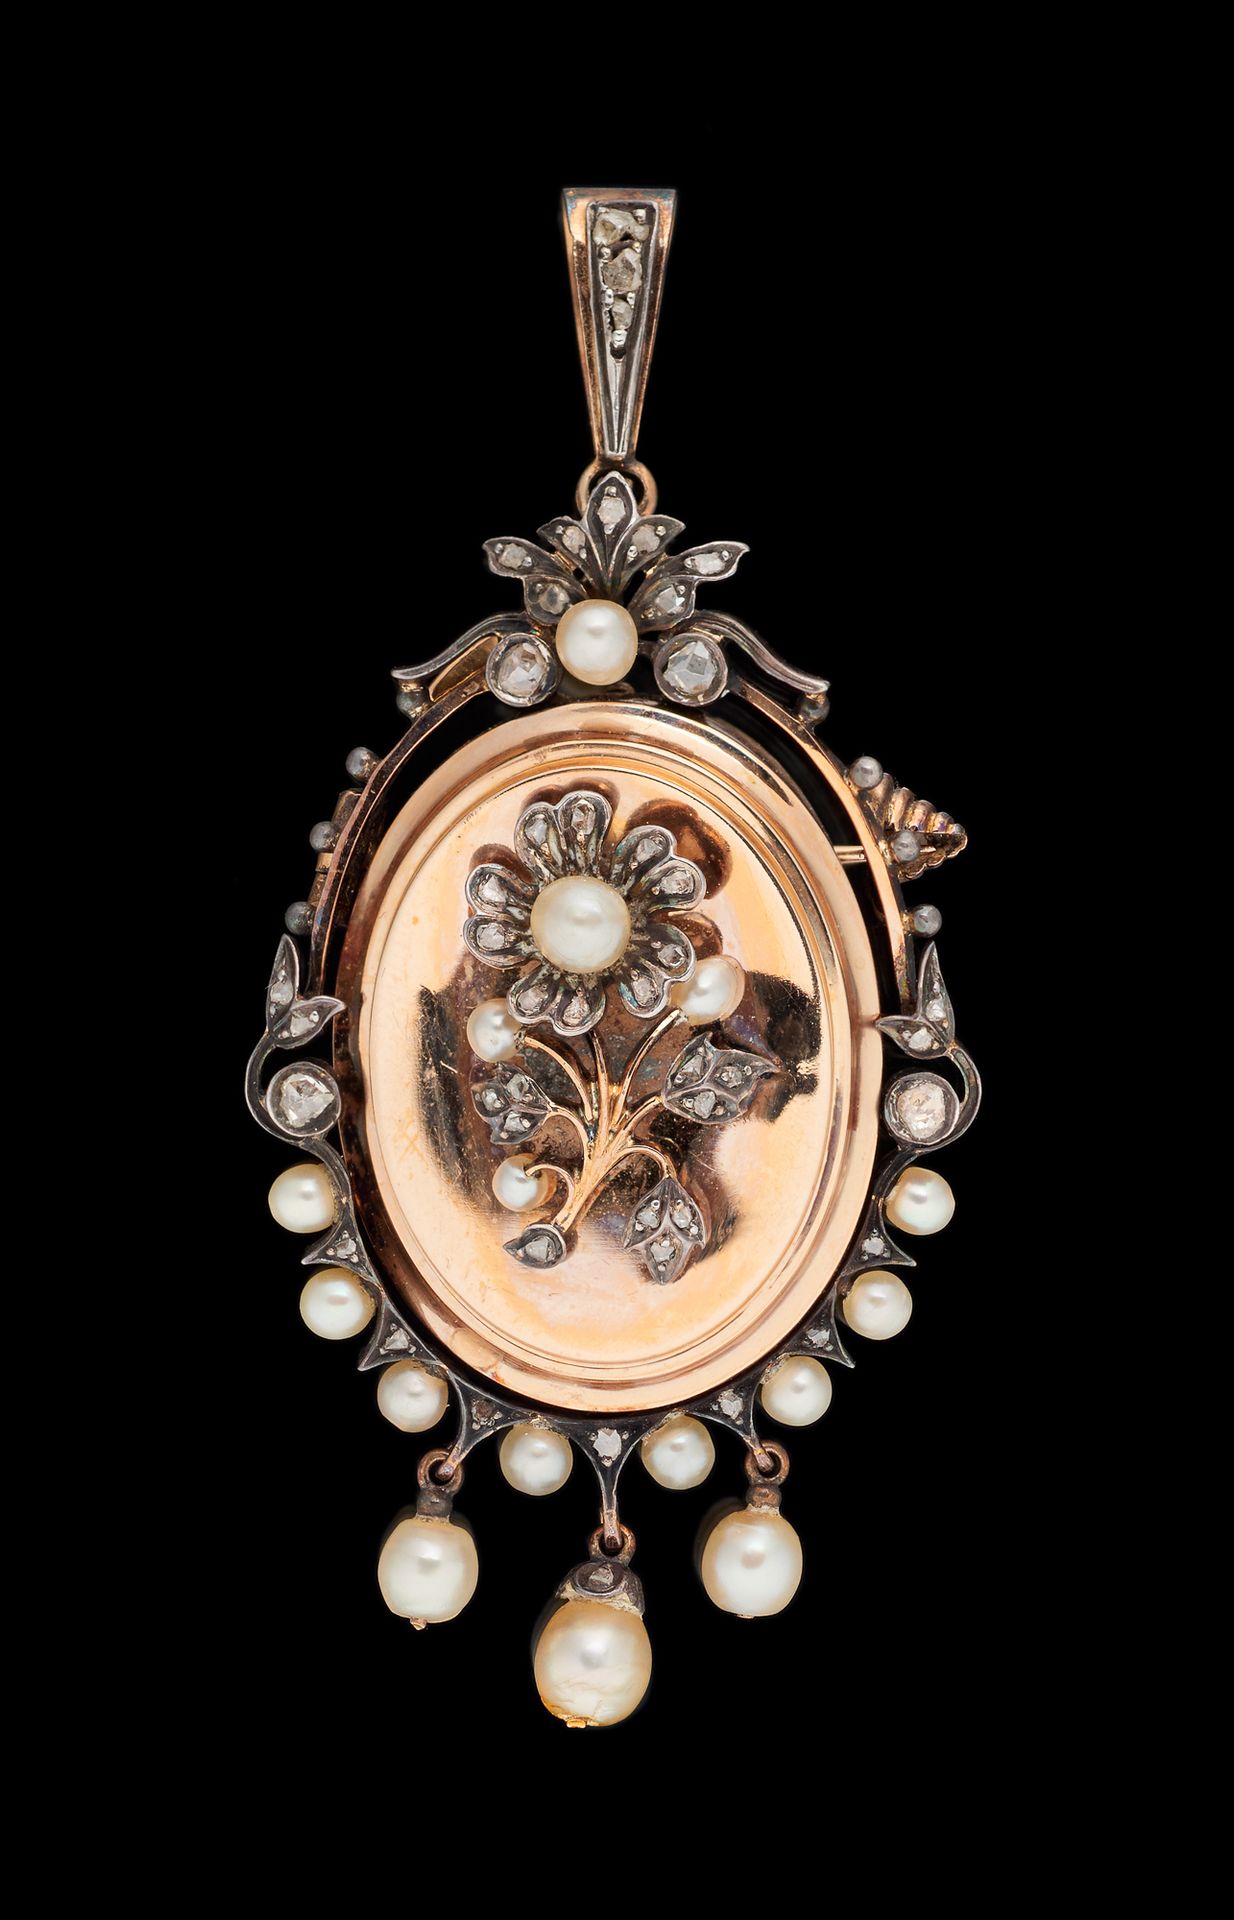 Travail fin 19e. 宝石：可作为胸针佩戴的金银色吊坠，饰有珍珠和玫瑰切割钻石。

尺寸：7,1 x 3,2厘米。